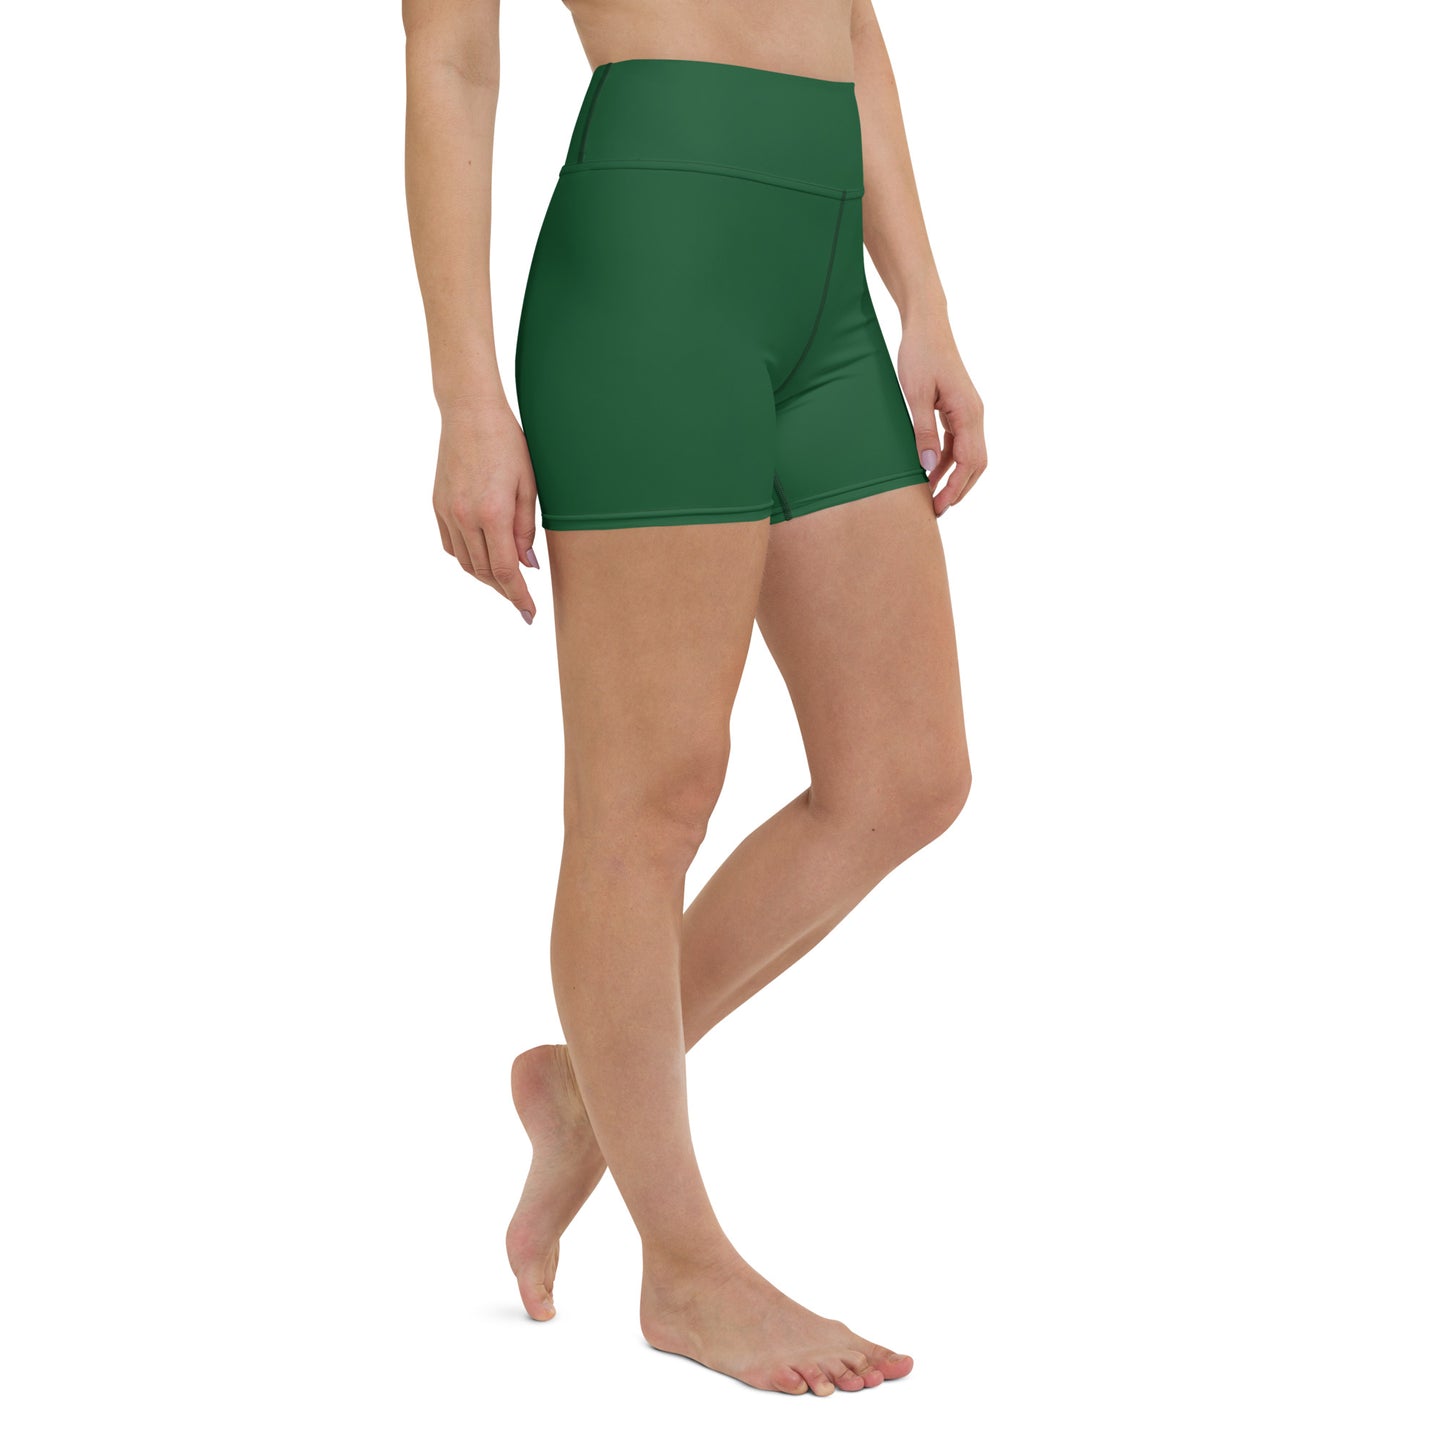 Edelweiss Solid Green High Waist Yoga Shorts / Bike Shorts with Inside Pocket